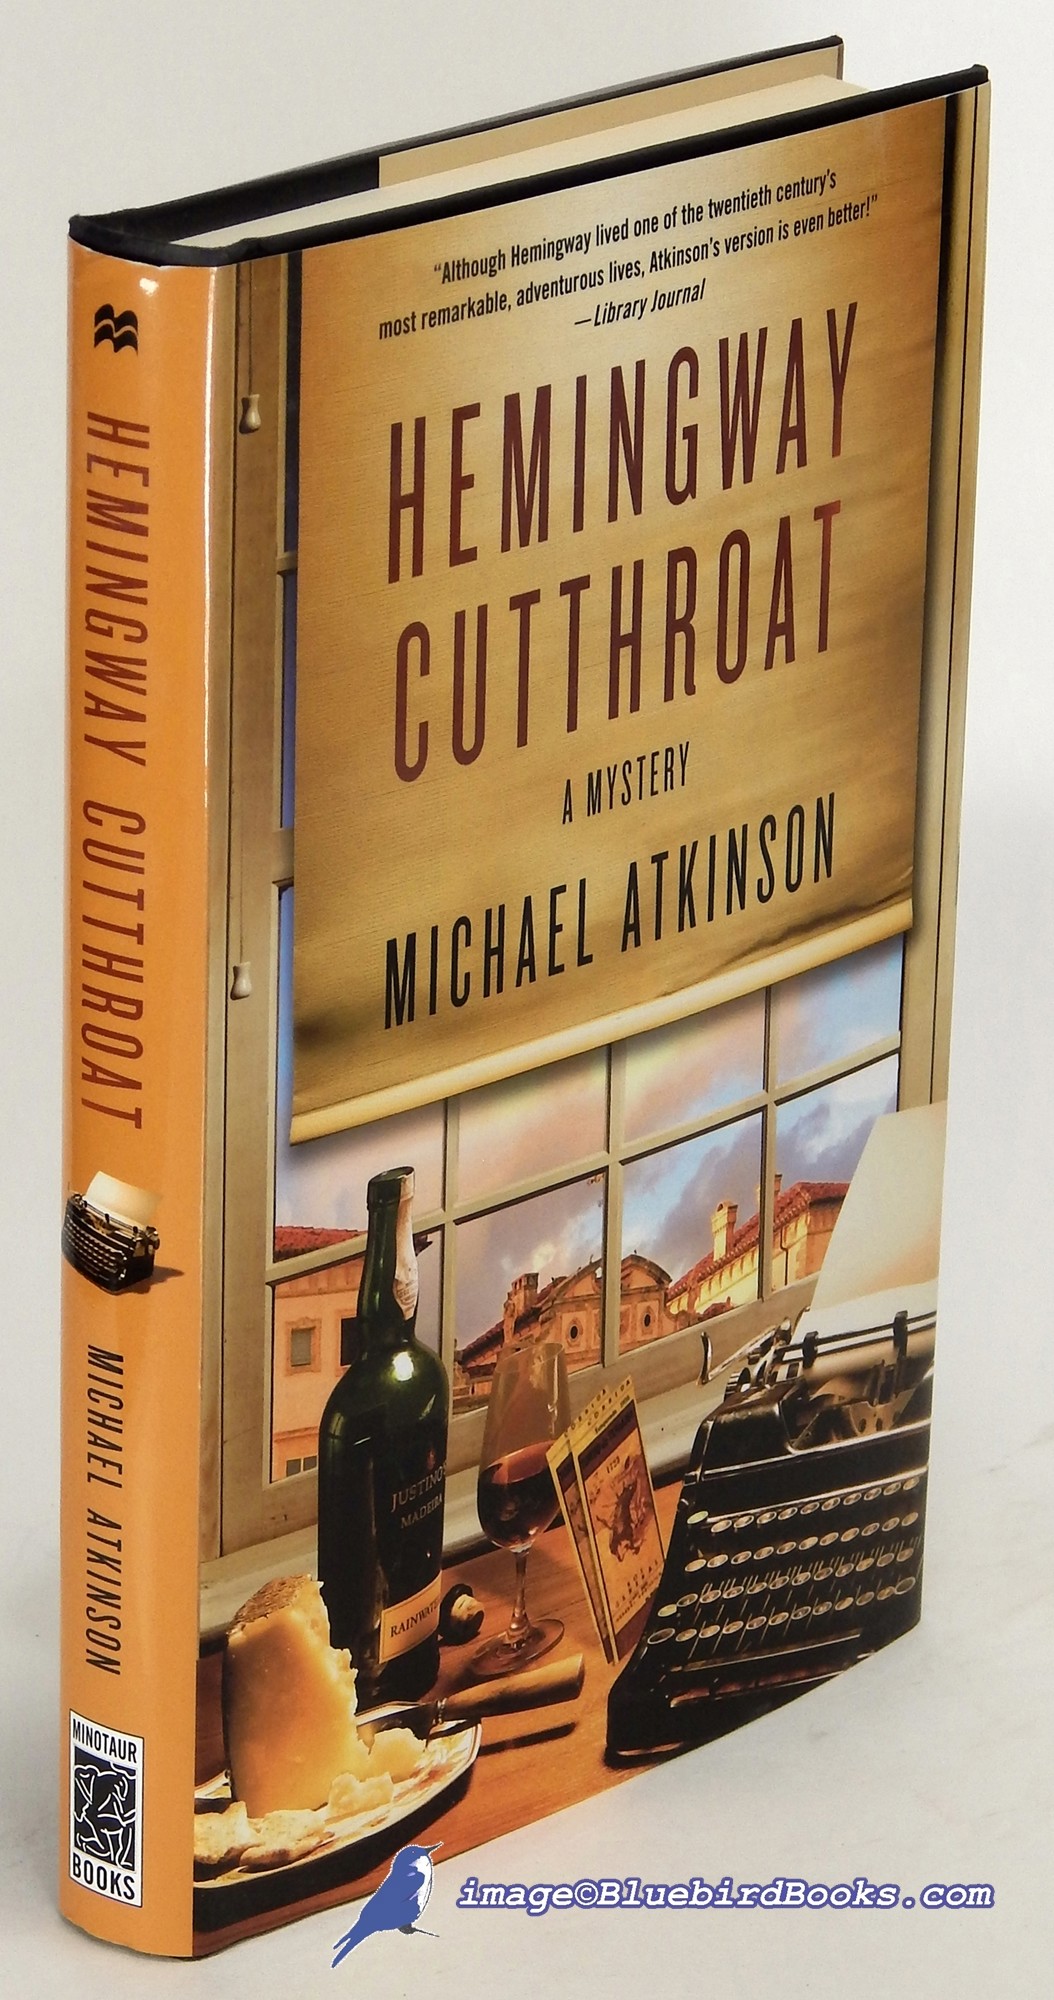 ATKINSON, MICHAEL - Hemingway Cutthroat